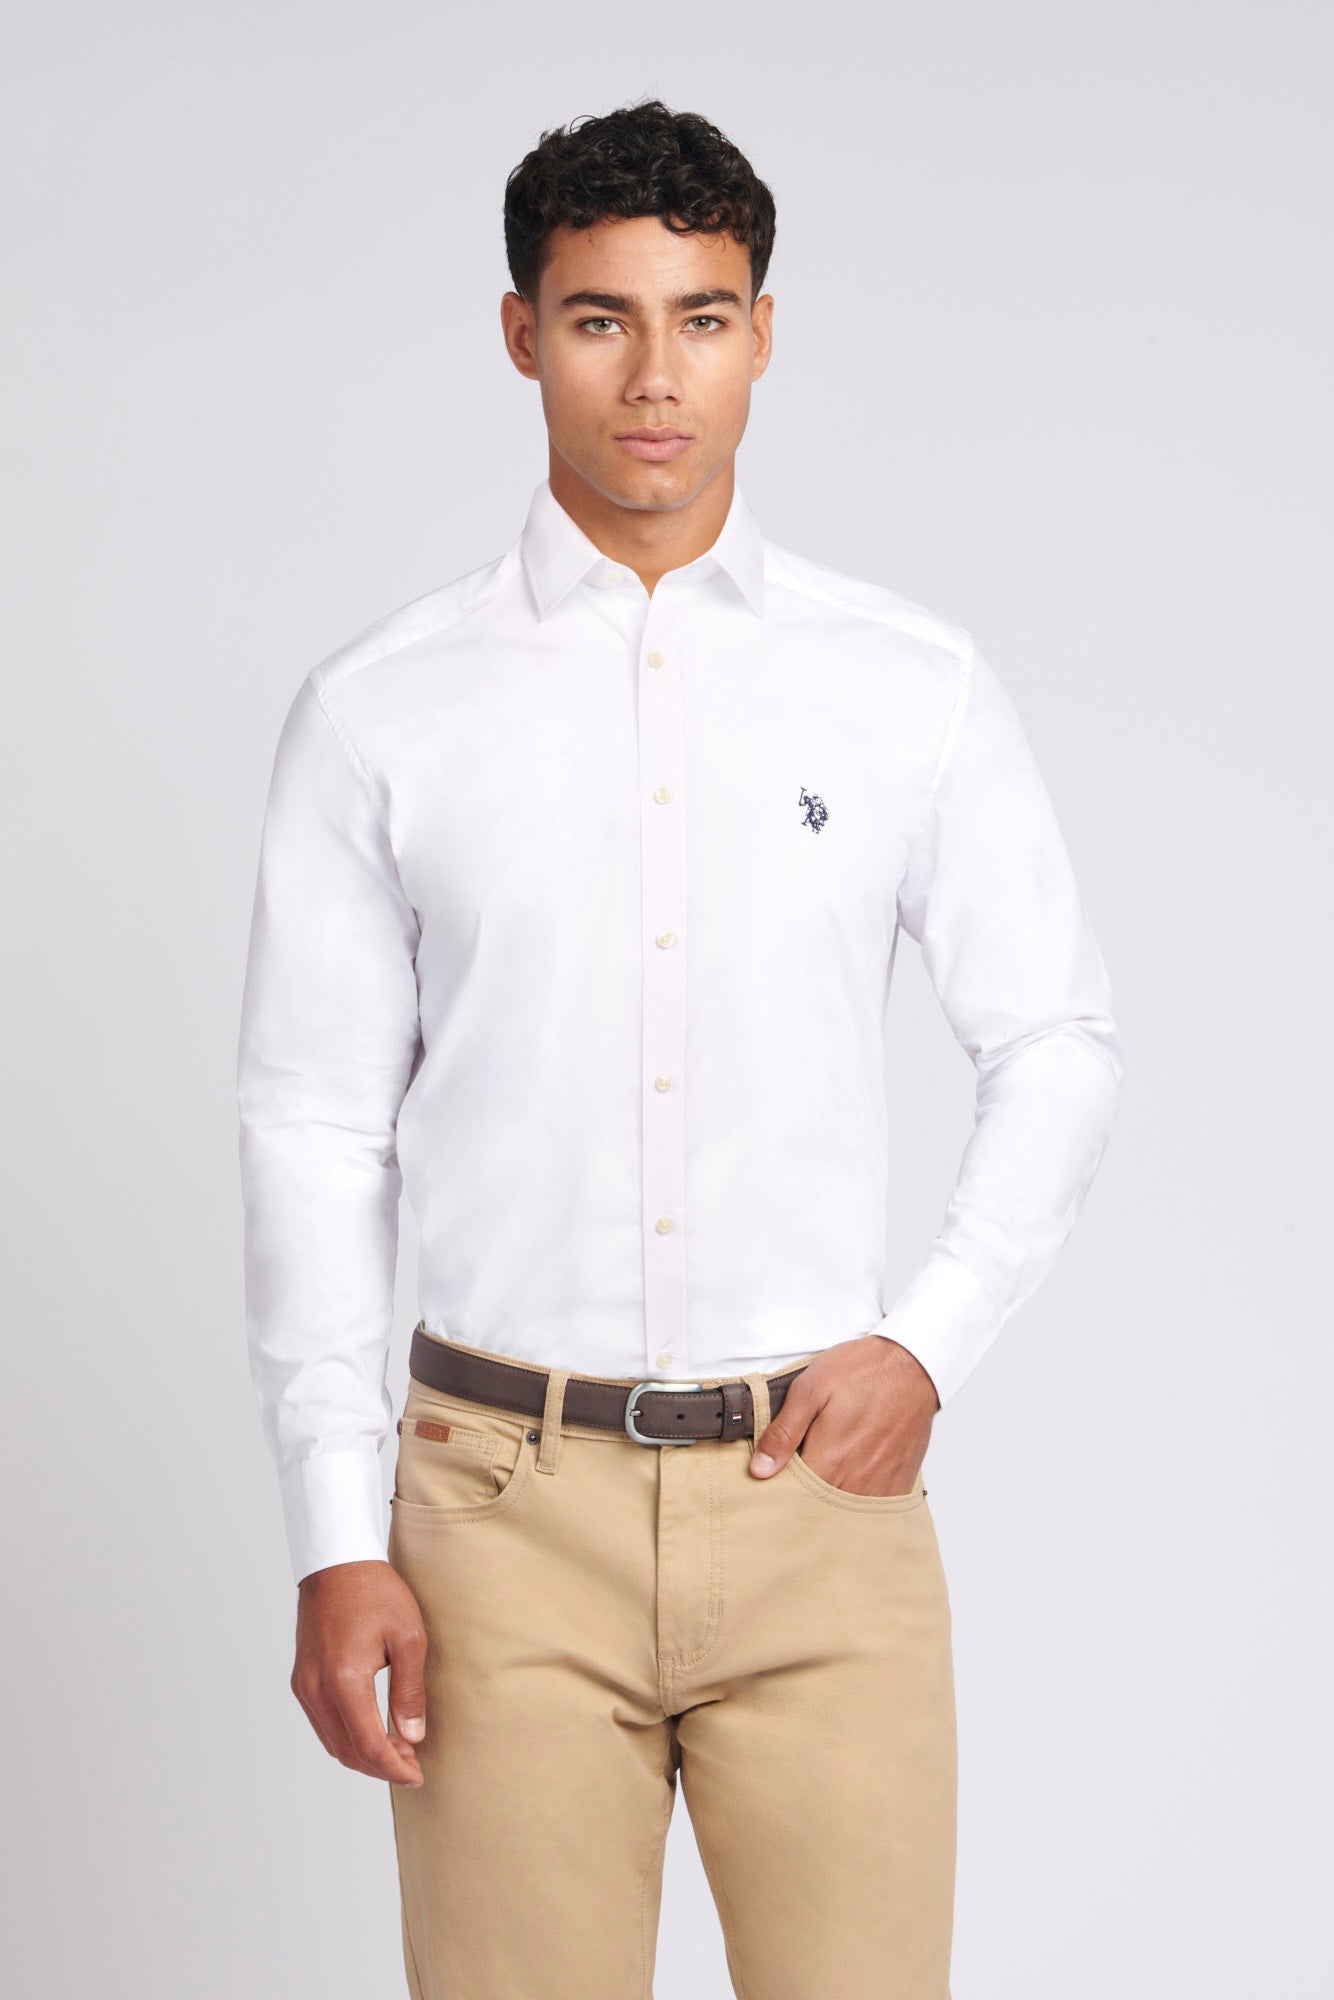 U.S. Polo Assn. Mens Long Sleeve Poplin Shirt in White